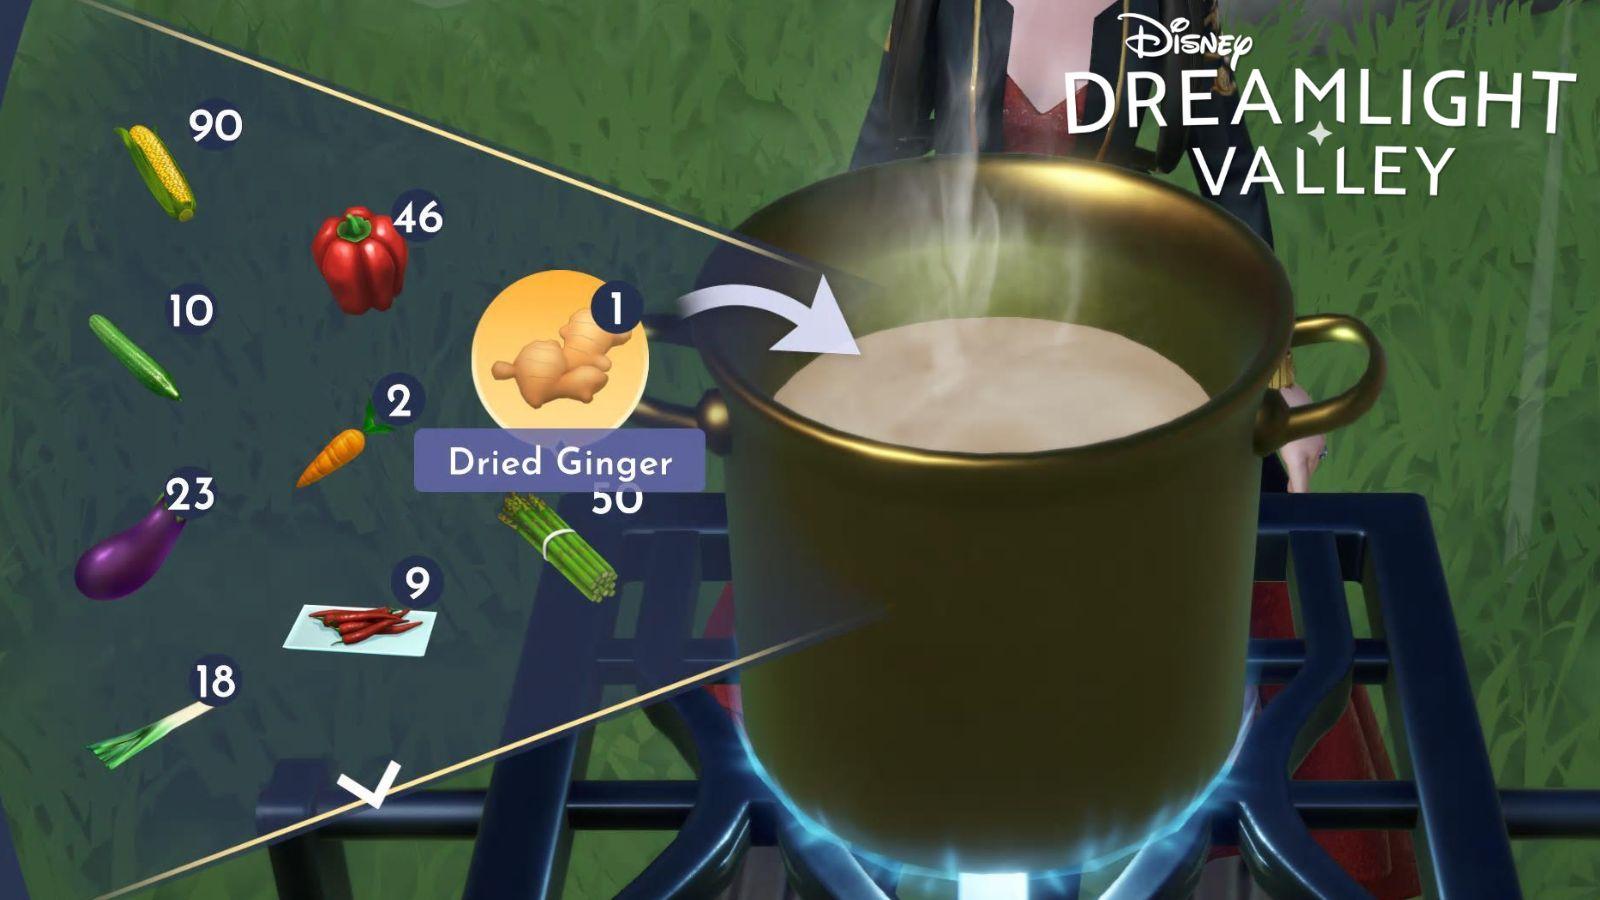 Disney Dreamlight Valley dried ginger